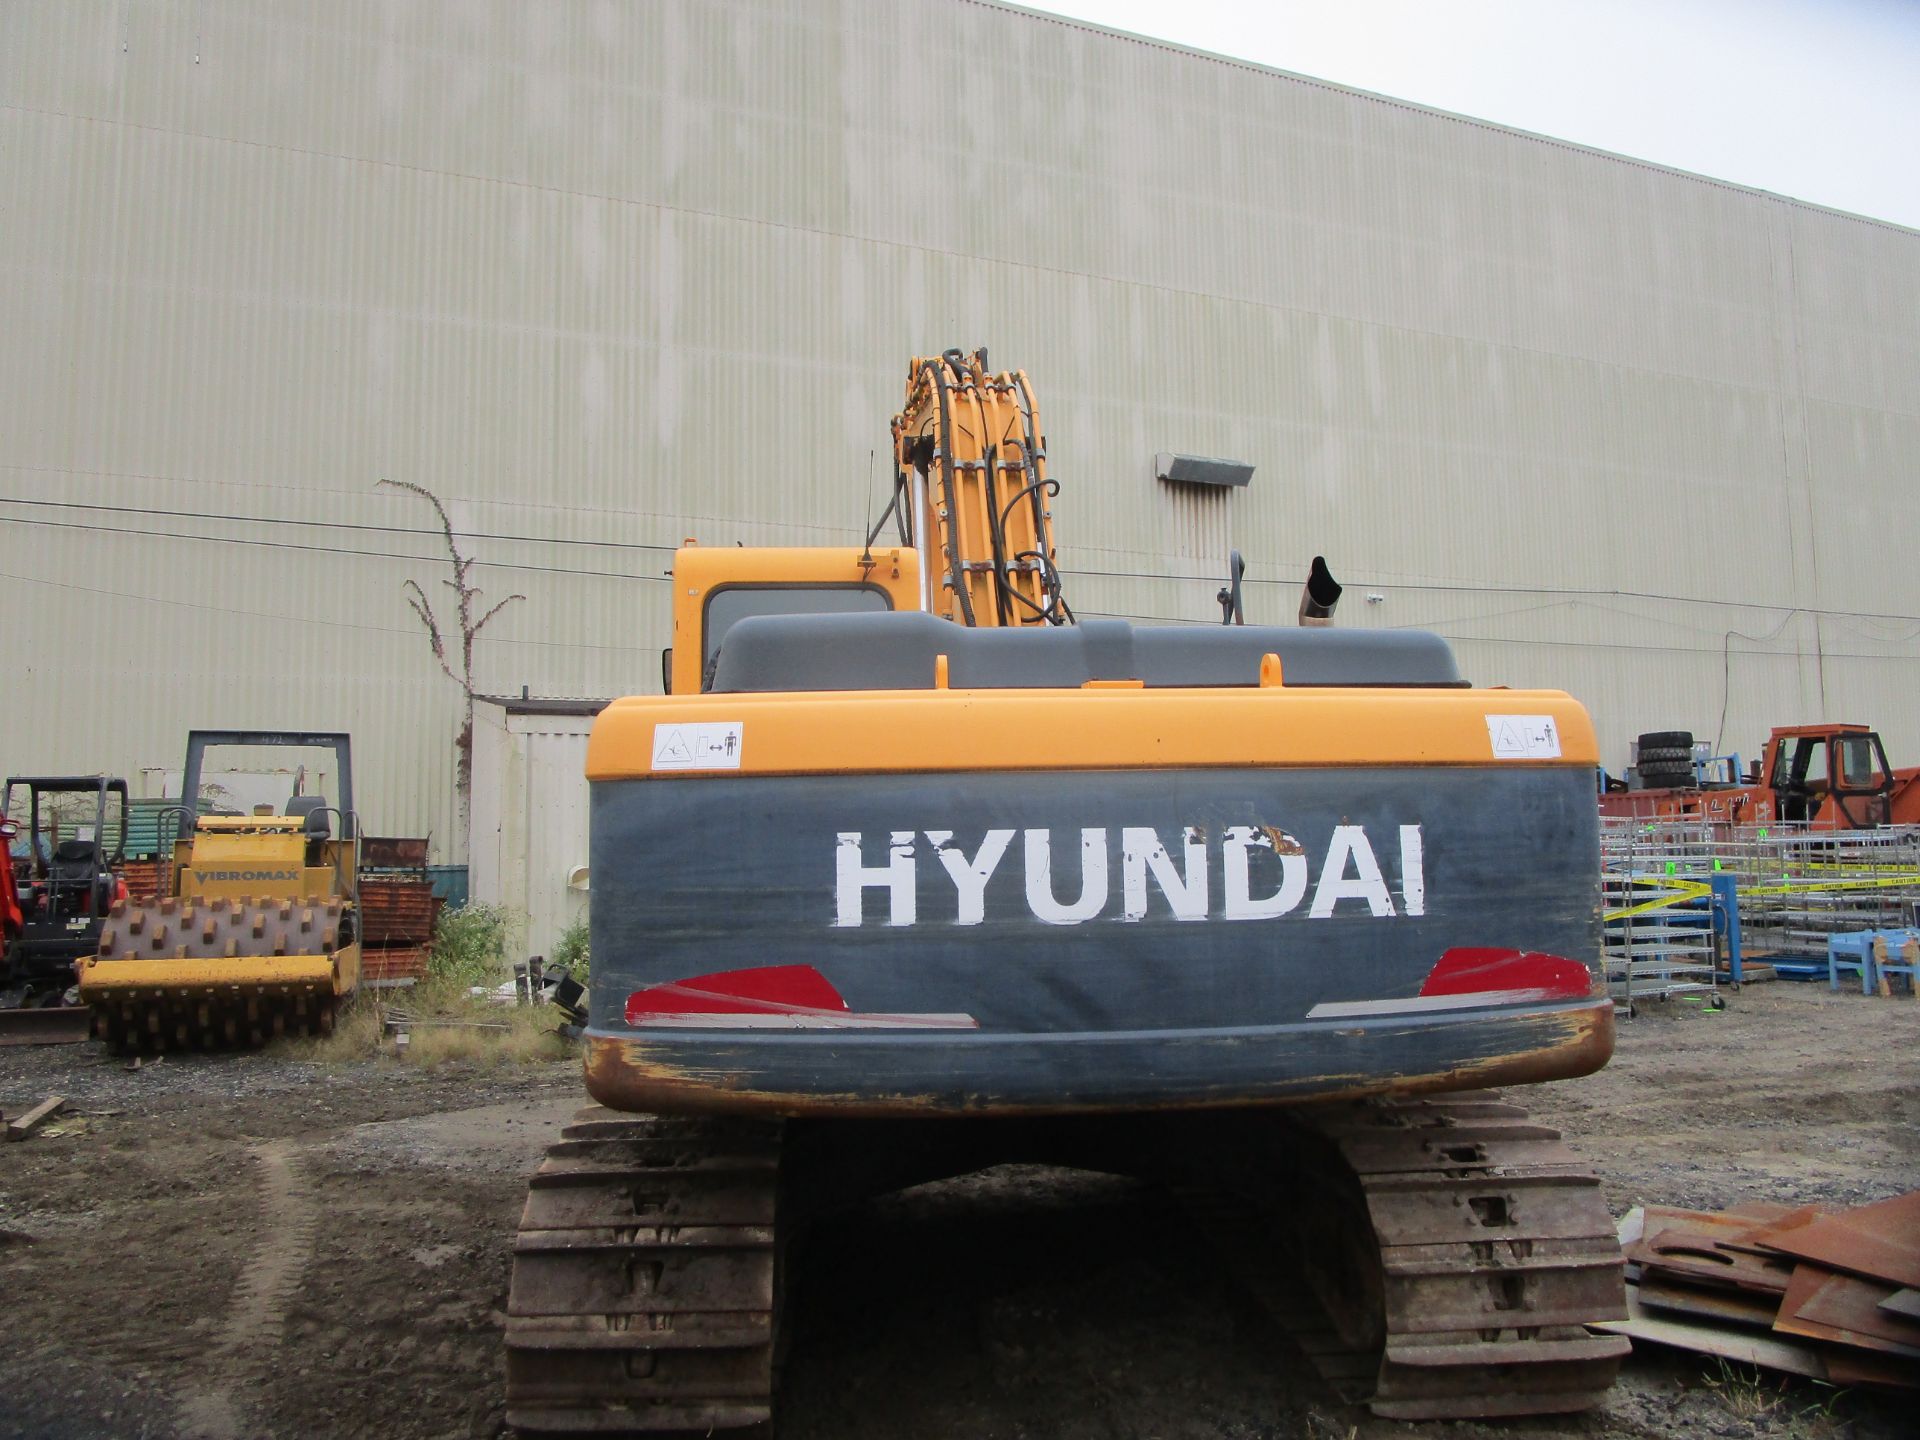 Hyundai R0BEX210LC-9 Excavator - Located in Lester, PA - Image 3 of 4